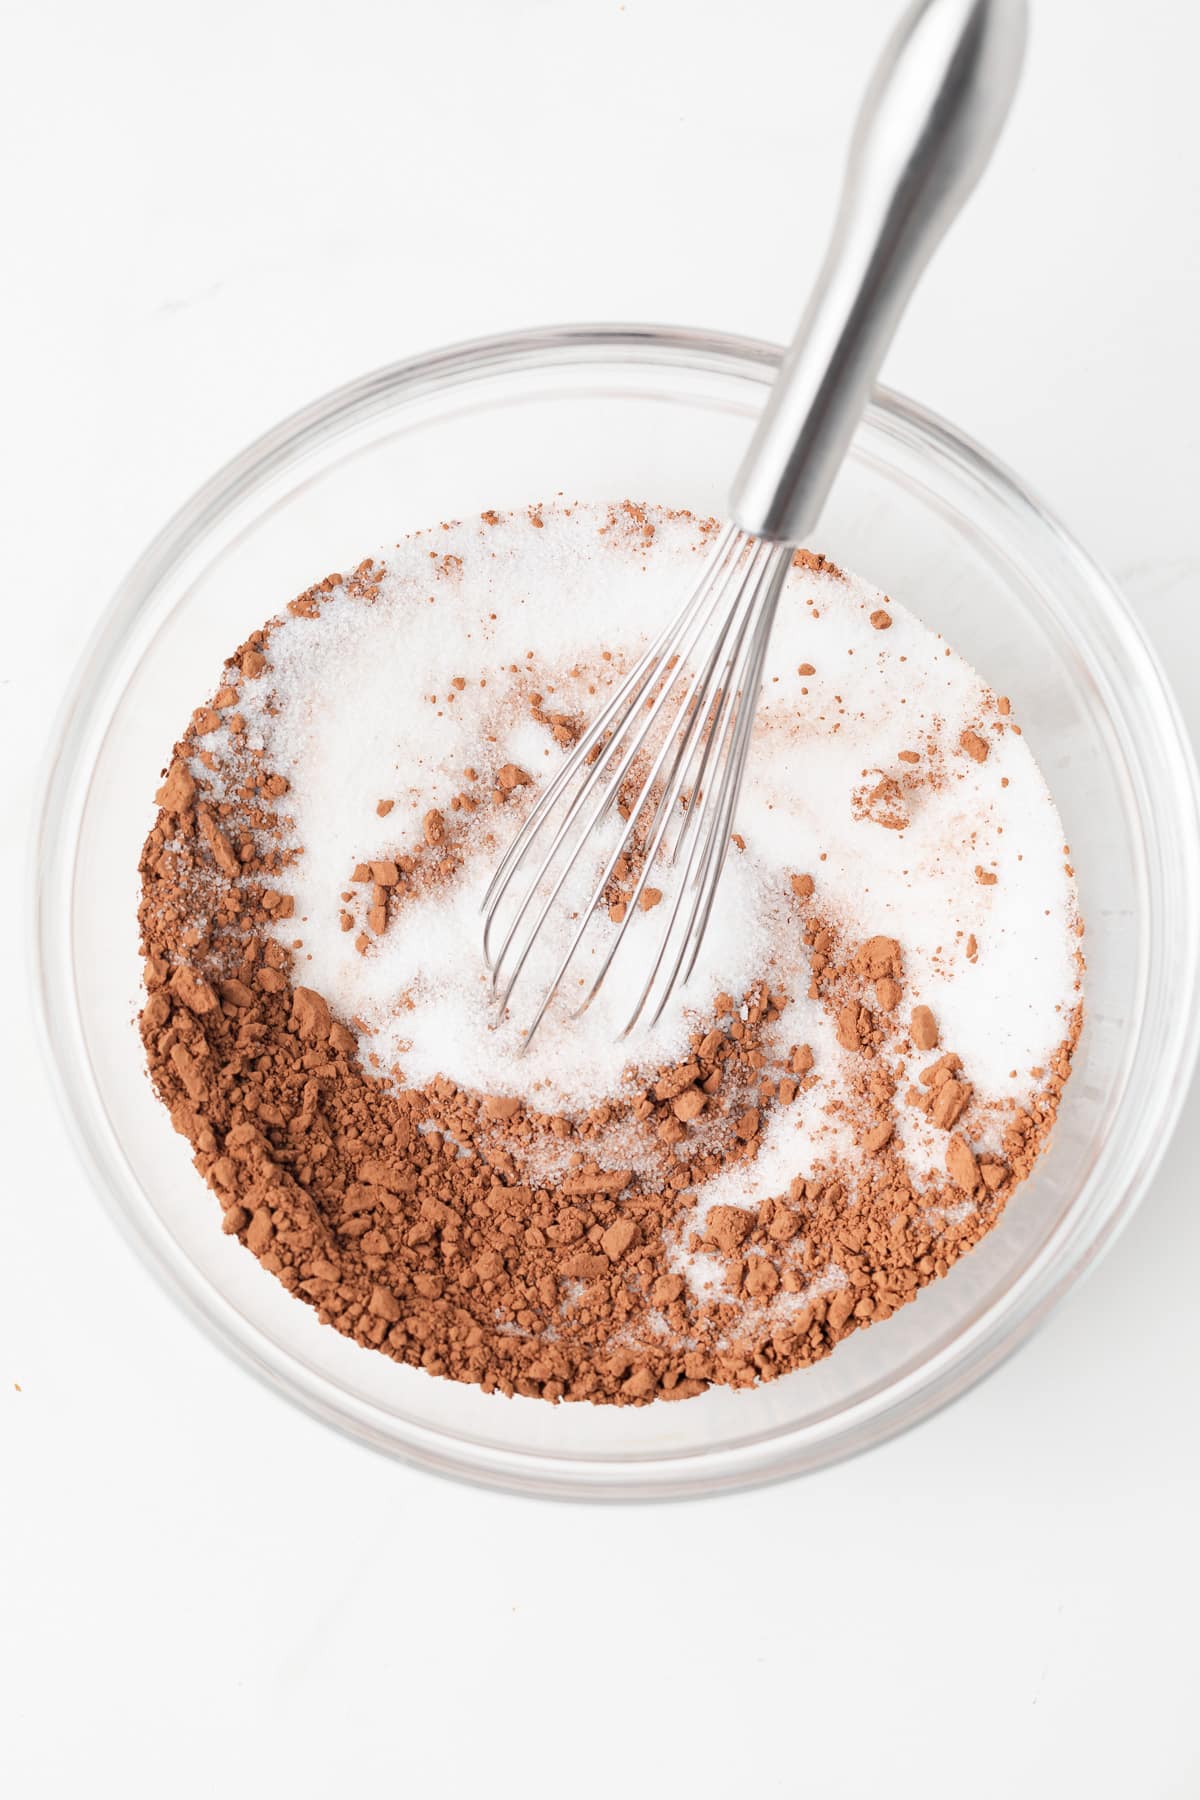 Sugar and cocoa powder in glass bowl.